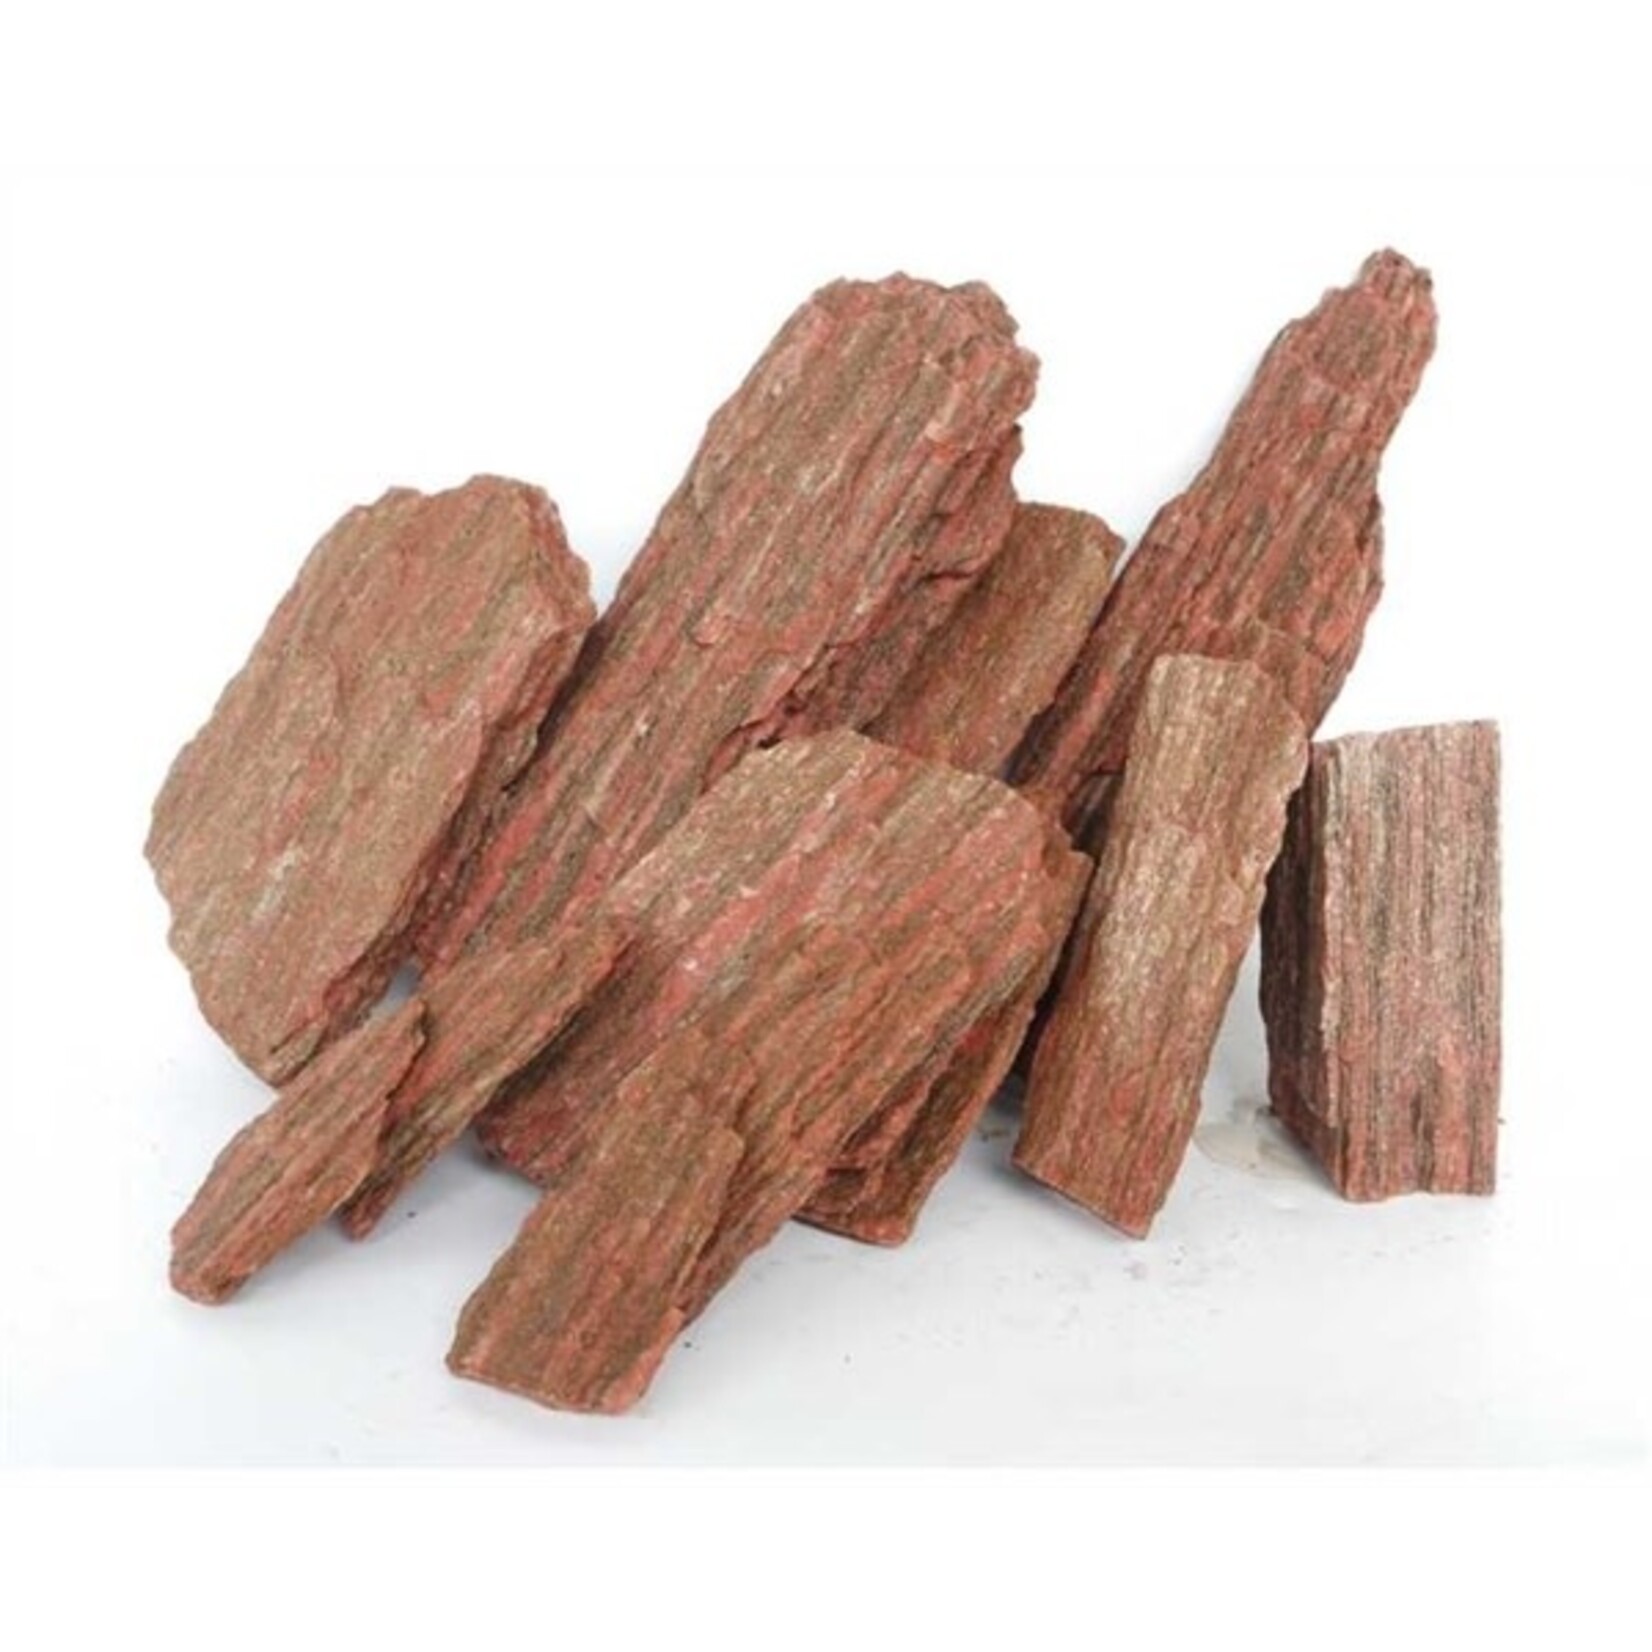 HS Aqua Wood stone s  ca. 1-1.5 kg